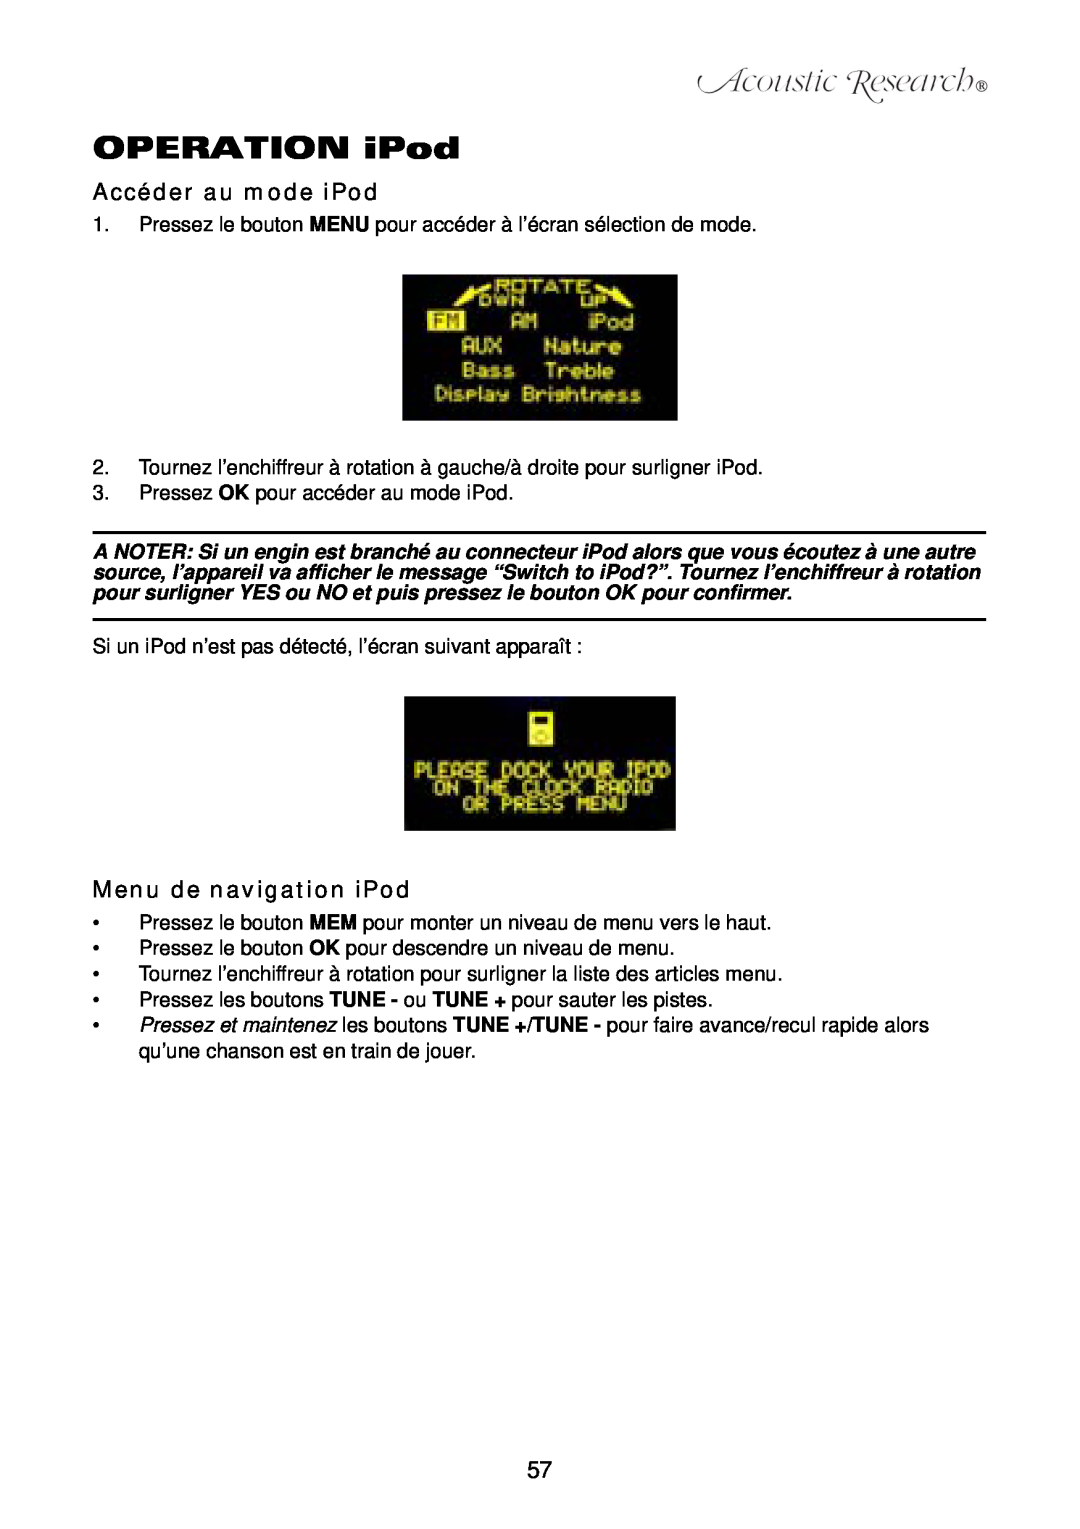 Acoustic Research ART1 owner manual OPERATION iPod, Accéder au mode iPod, Menu de navigation iPod 